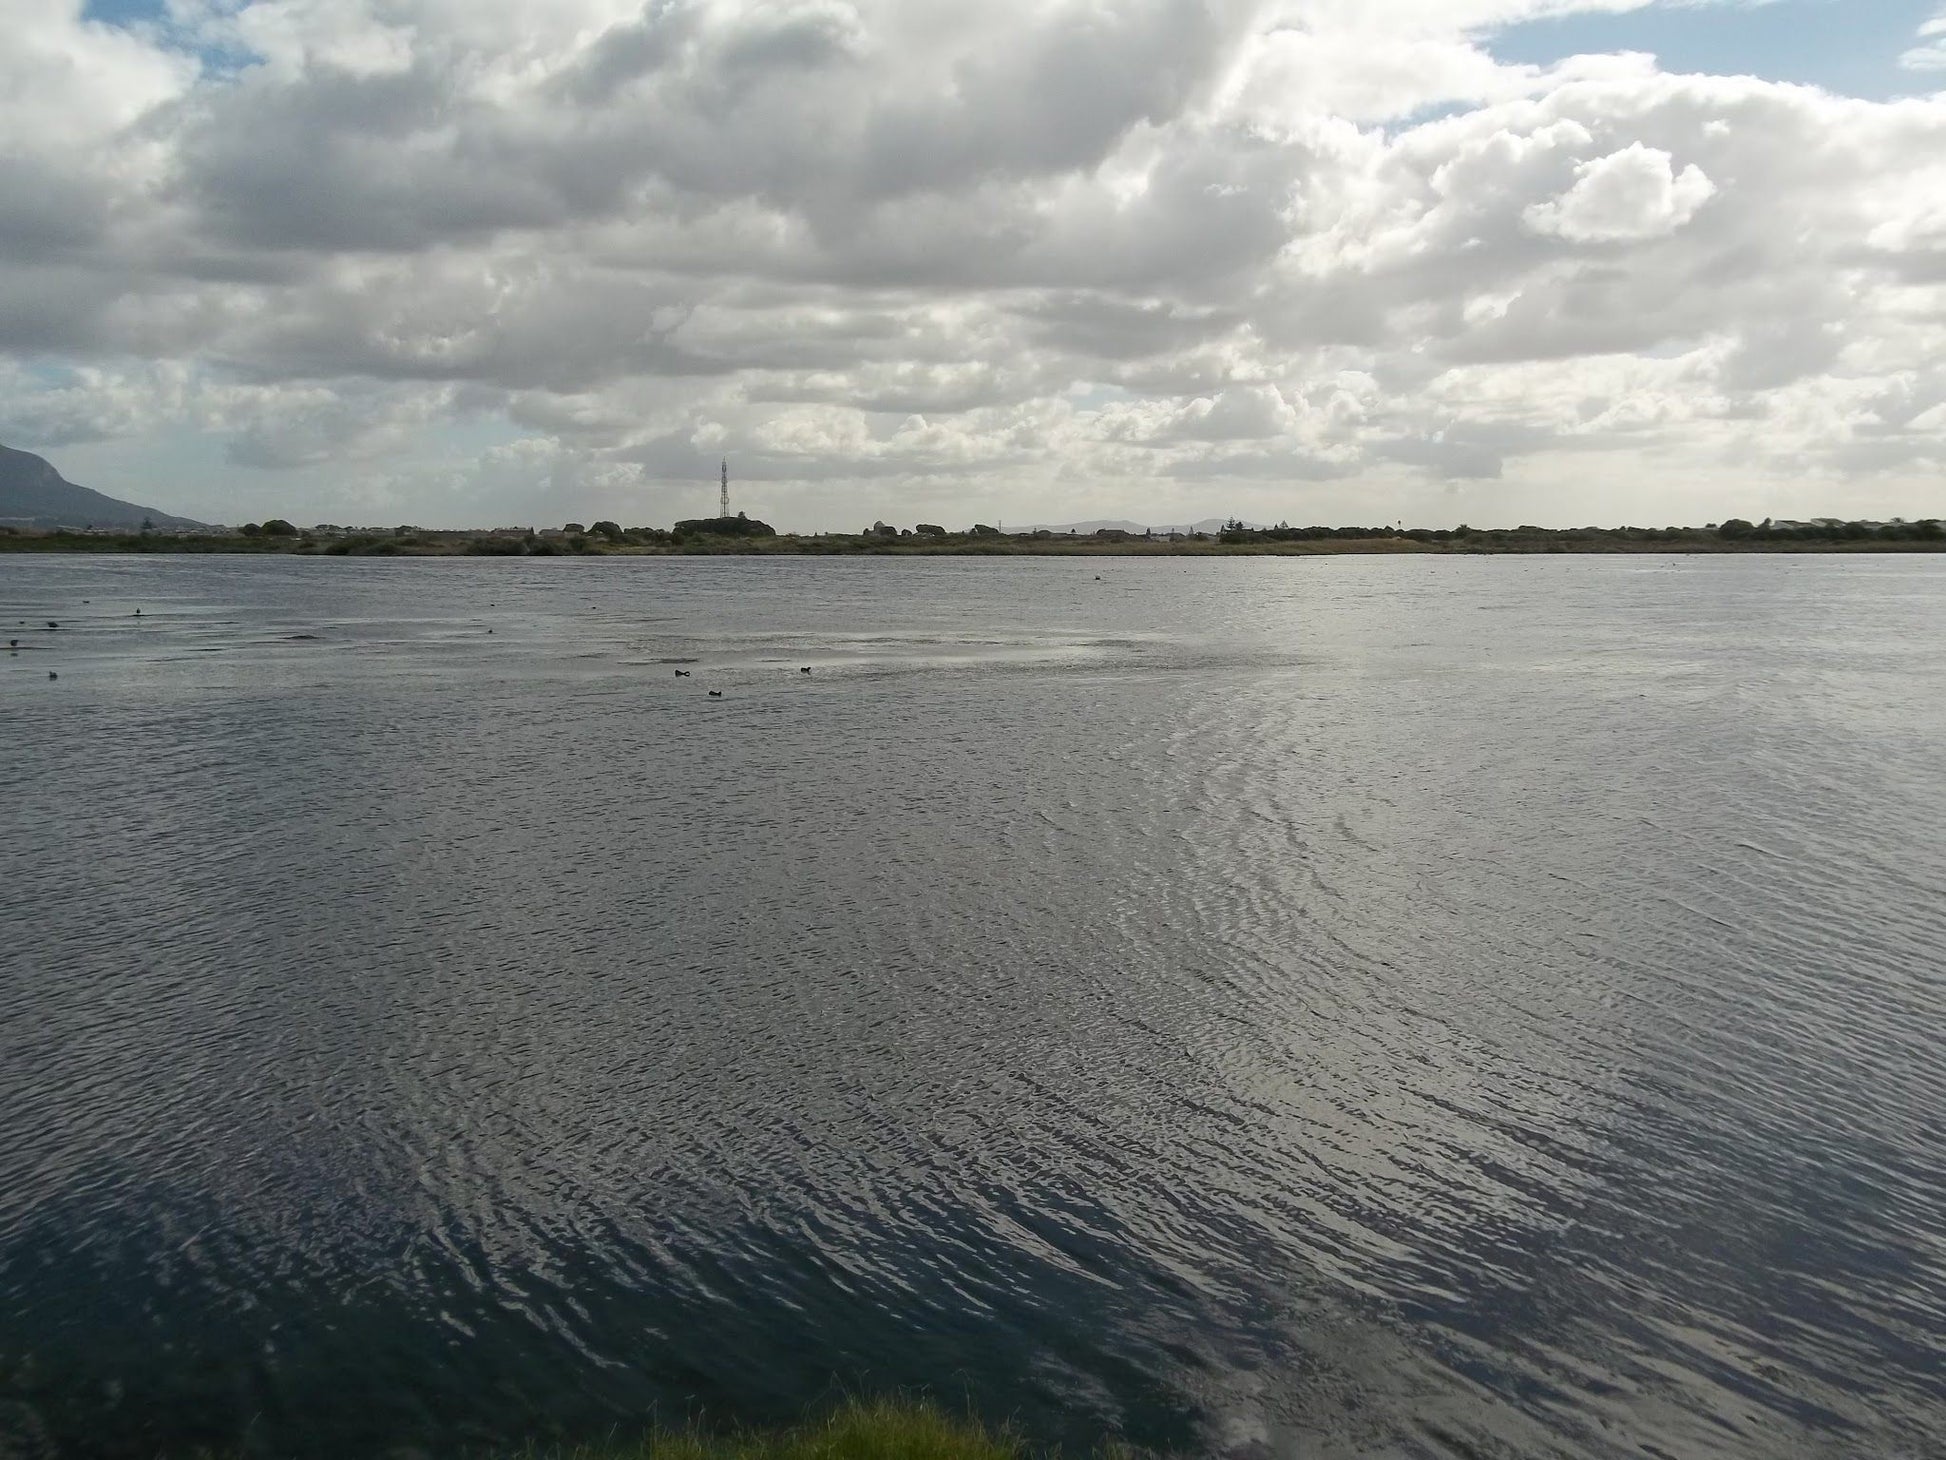  Zandvlei Estuary Nature Reserve